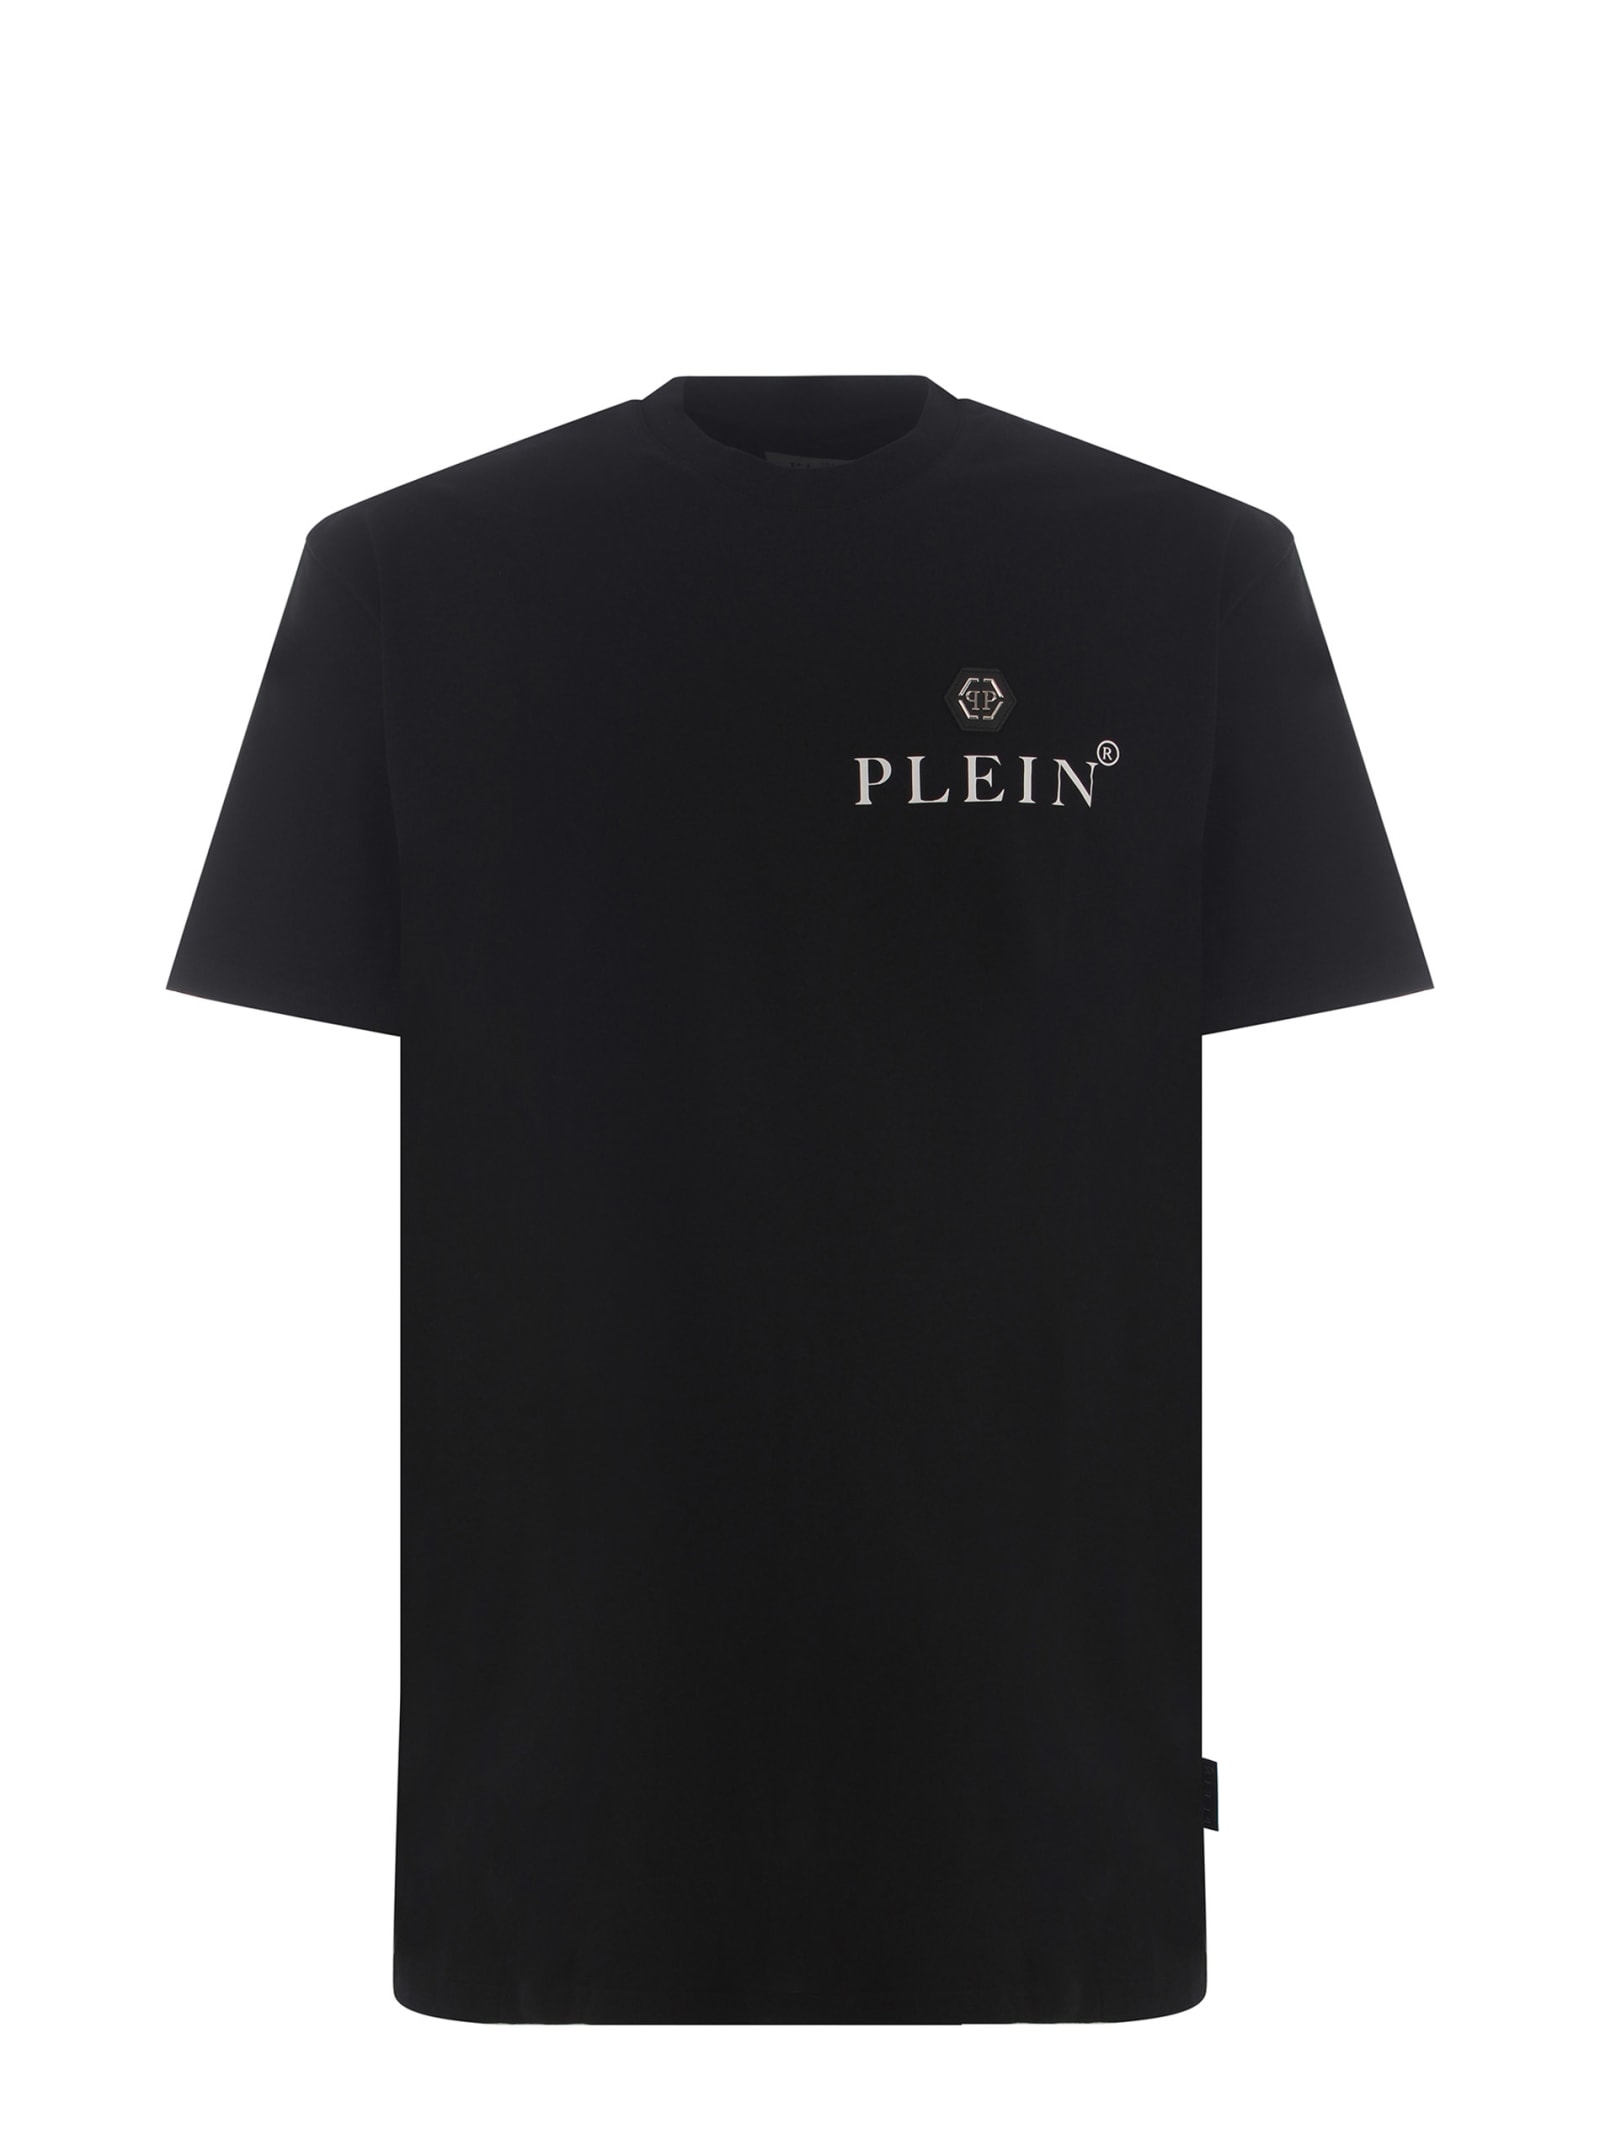 Philipp Plein T-shirt  Made Of Cotton In Black